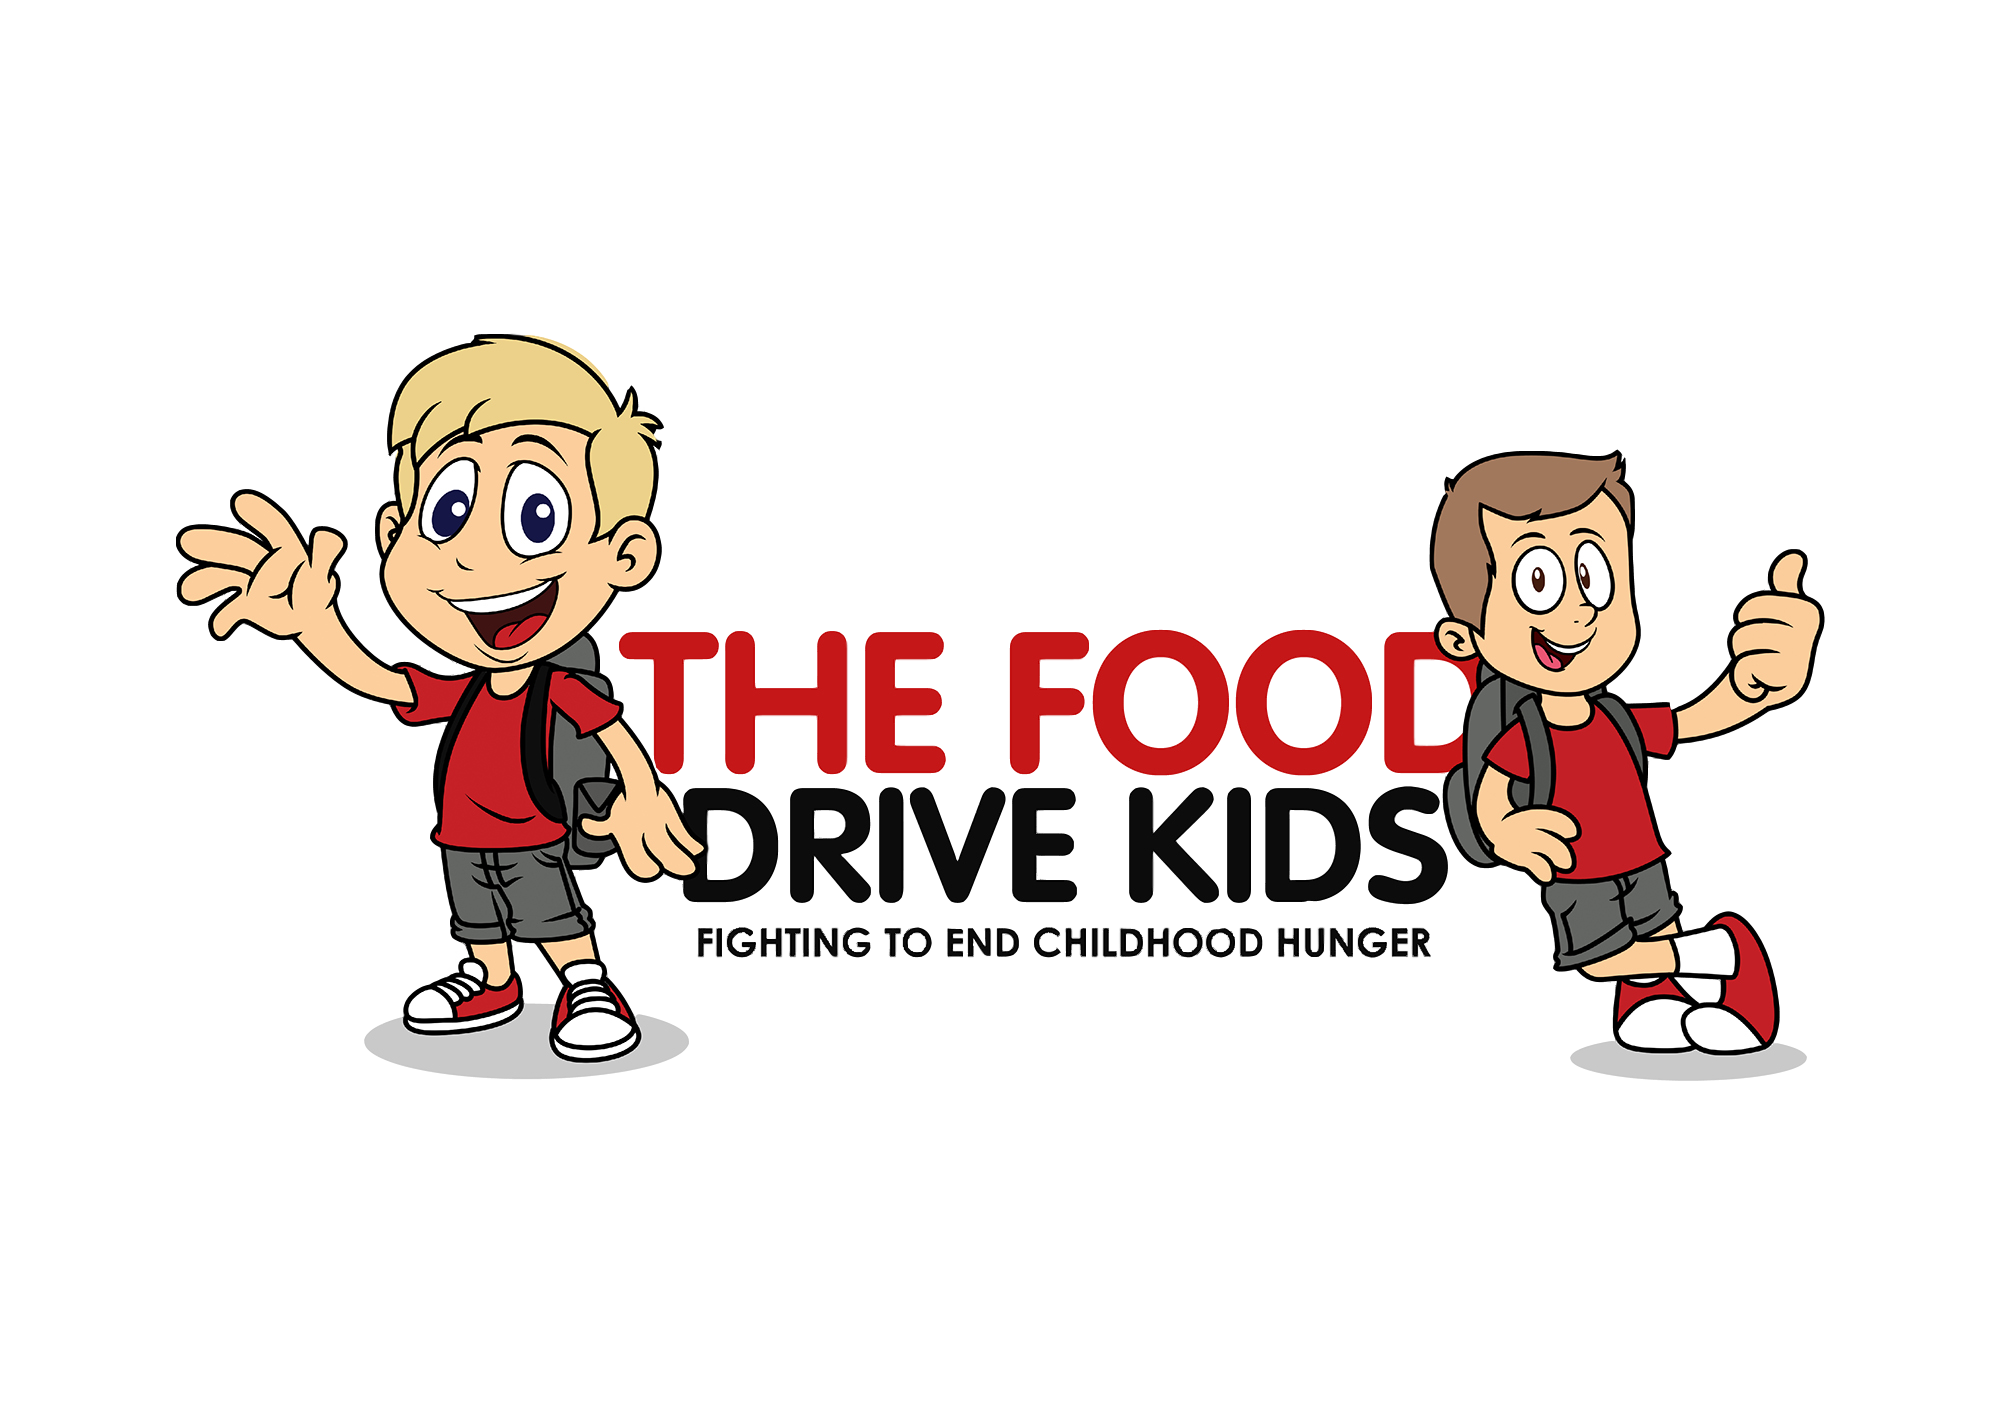 The Food Drive Kids logo